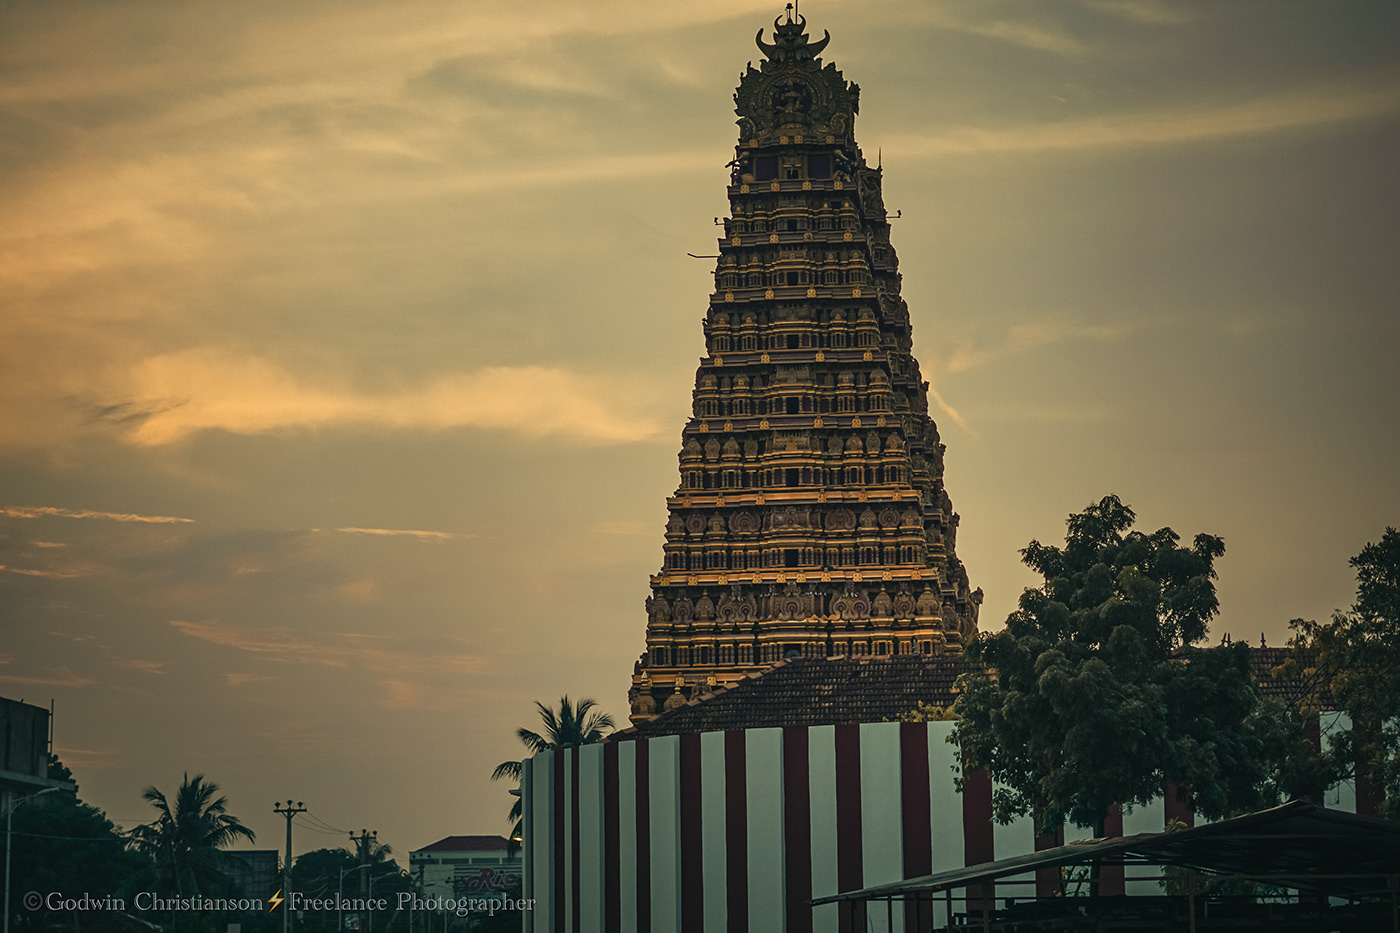 jaffna tamil culture history Hindu temple Photography  architectural kovil Nallur